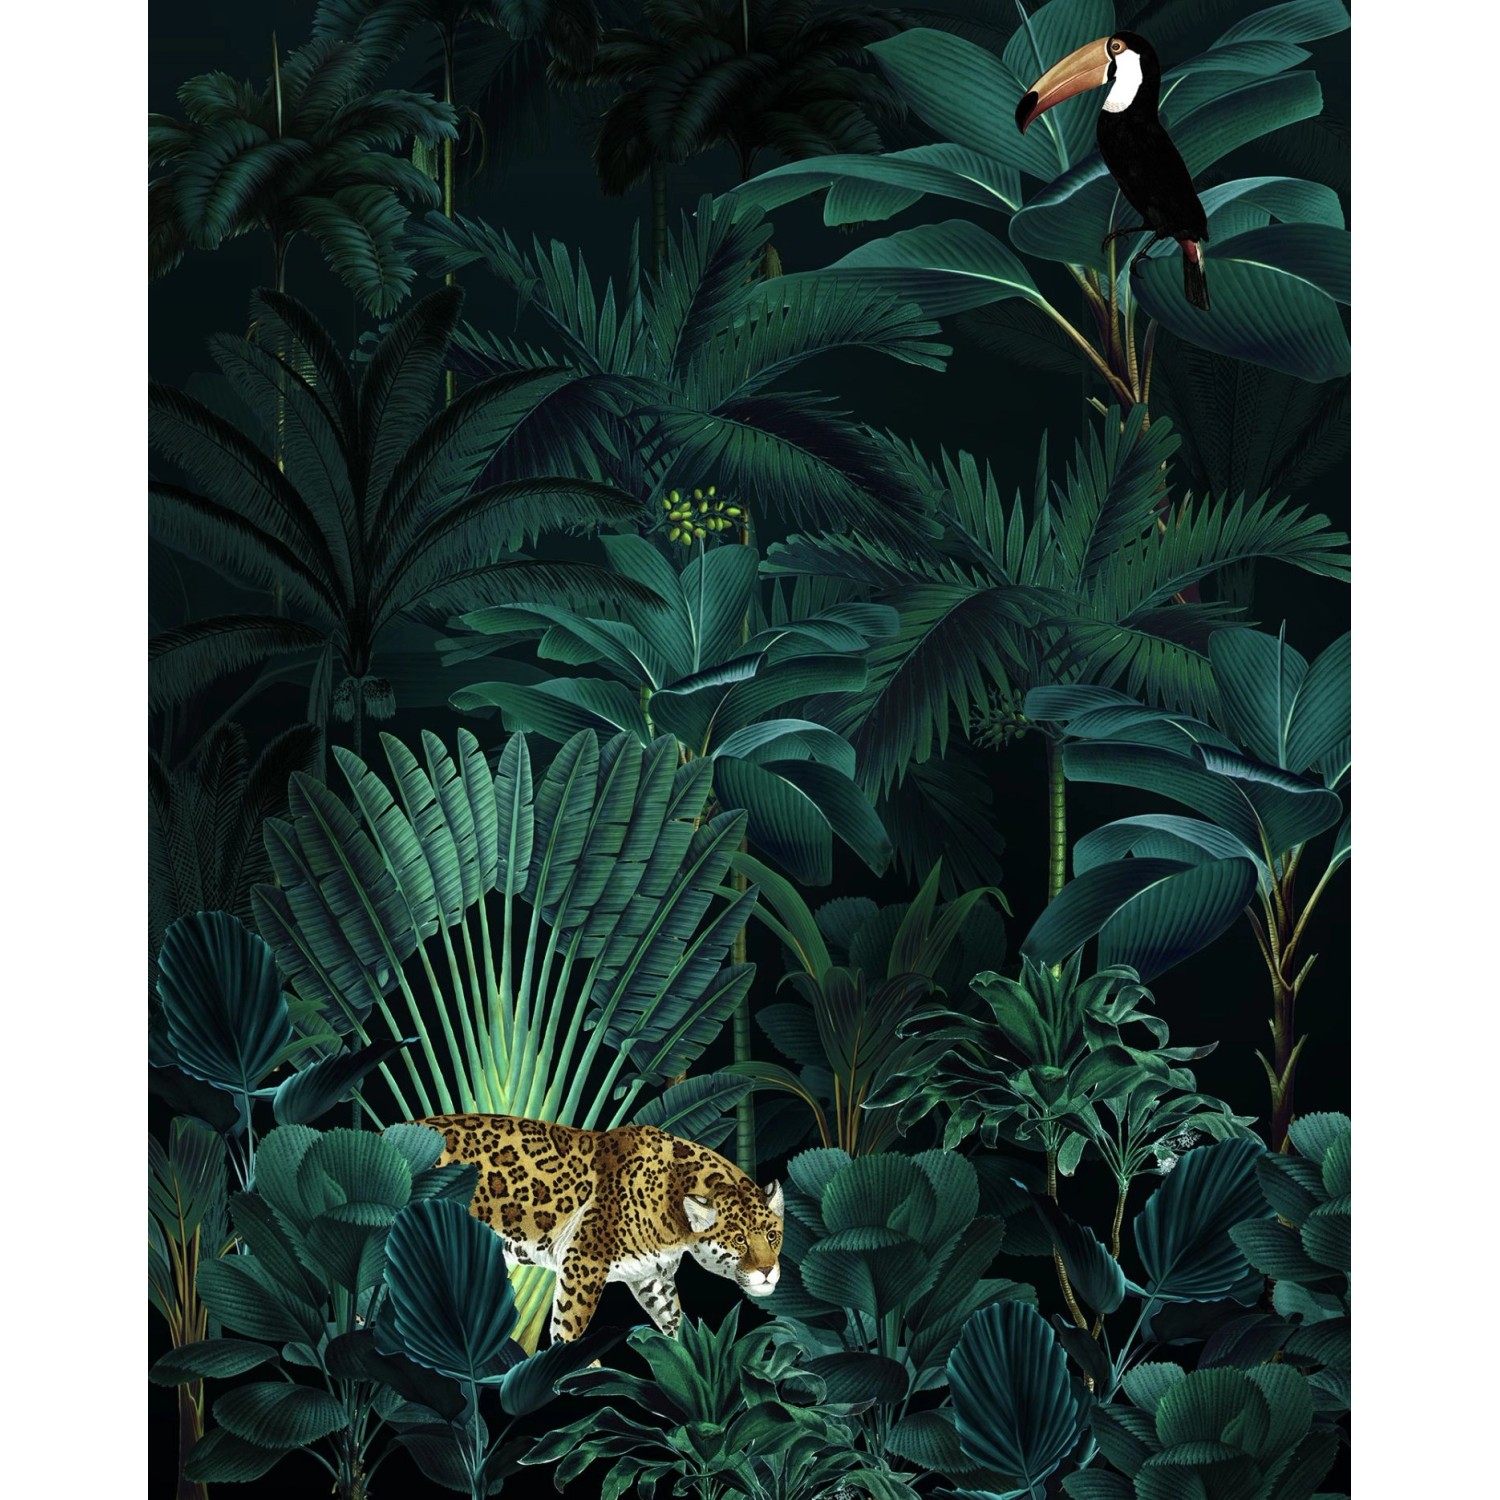 Komar Fototapete Jungle Night Grün 200 x 250 cm 611626 günstig online kaufen